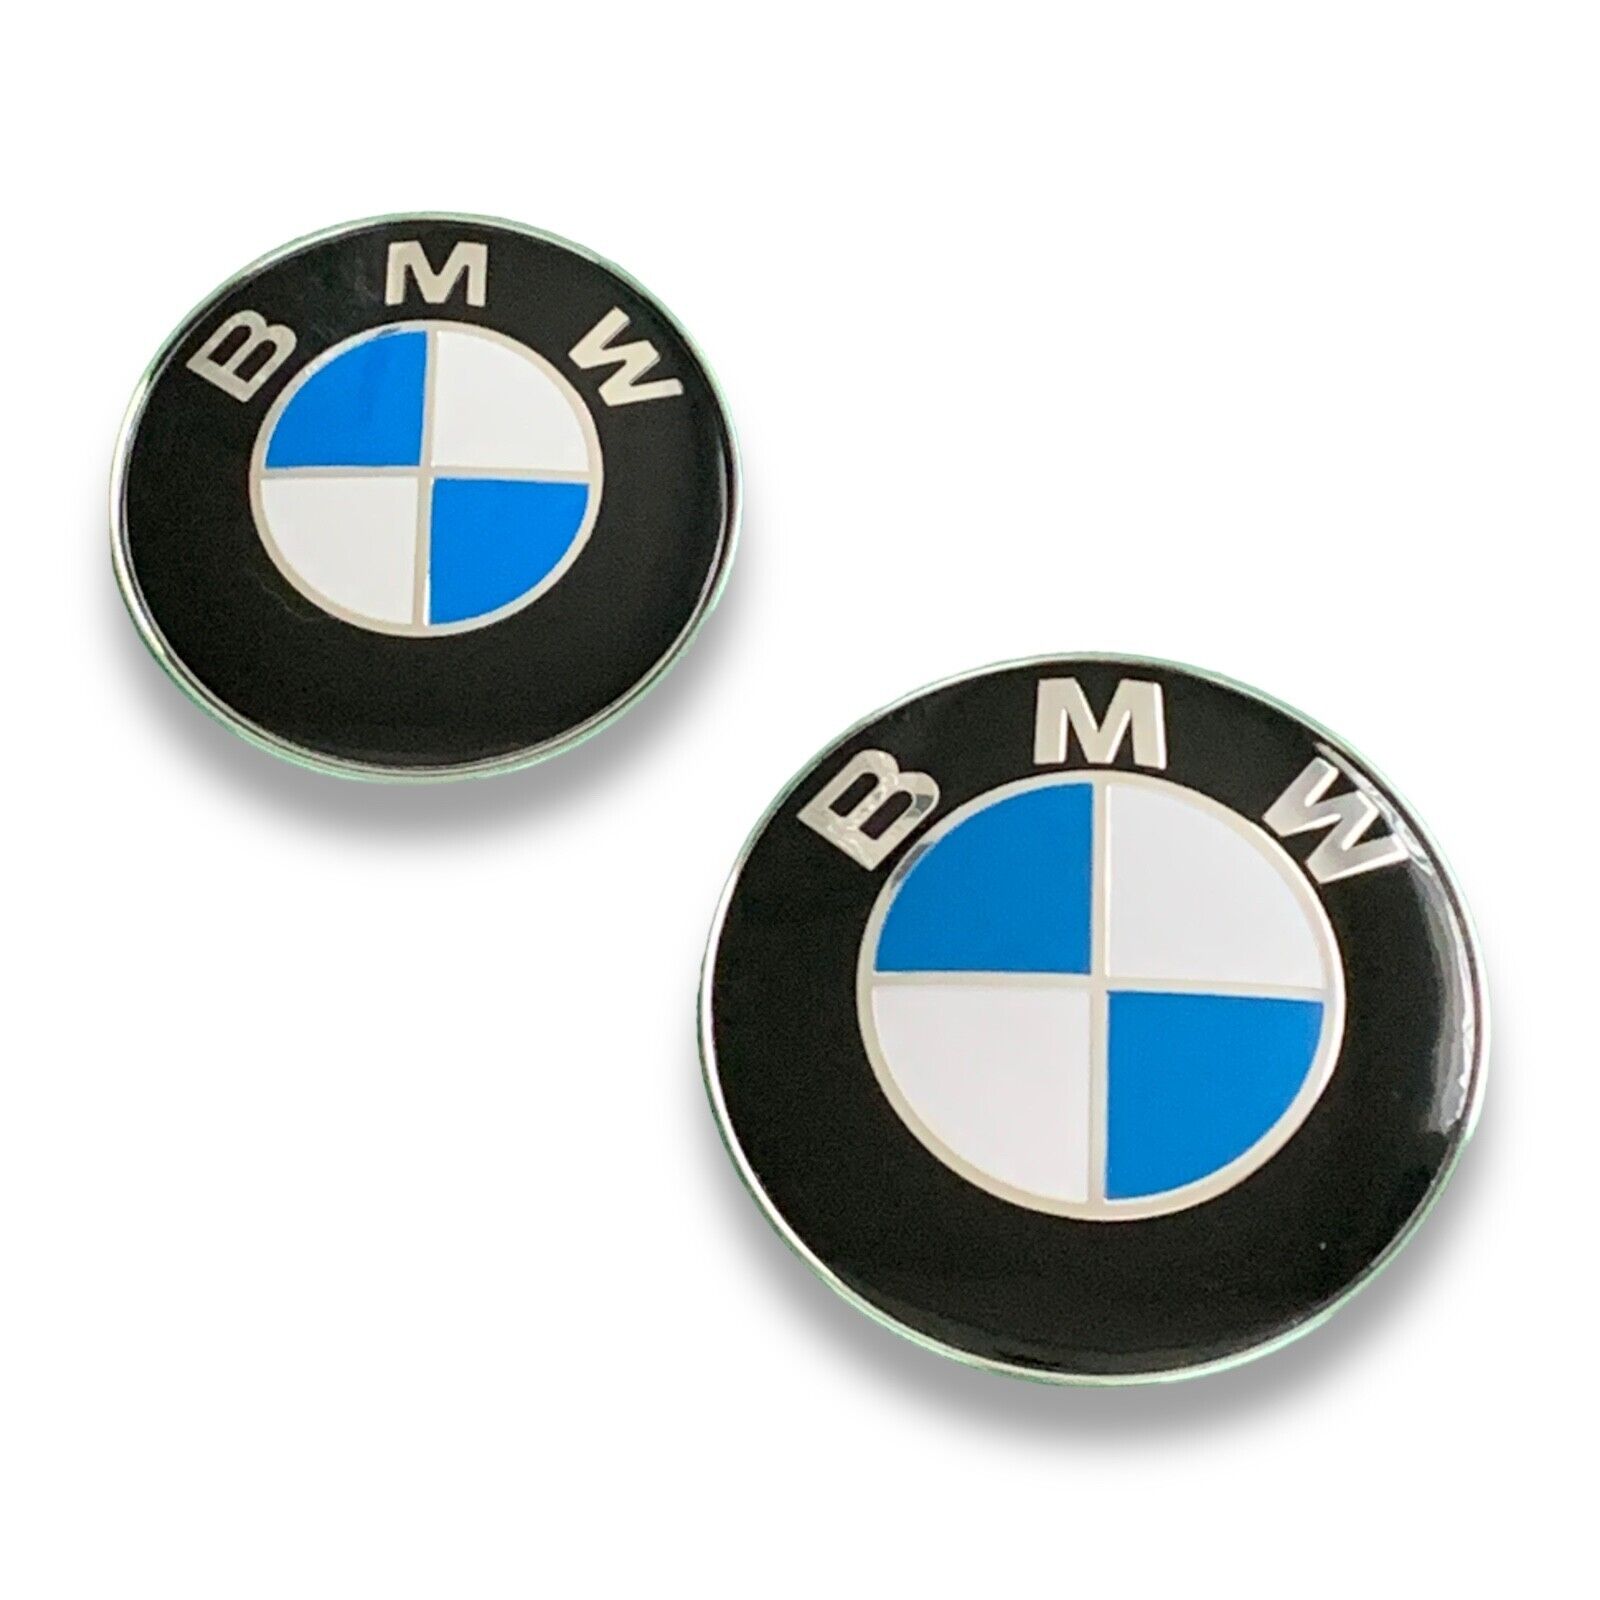 2PC Front Hood + Rear Trunk (82mm + 74mm) for BMW Badge Emblem 51148132375